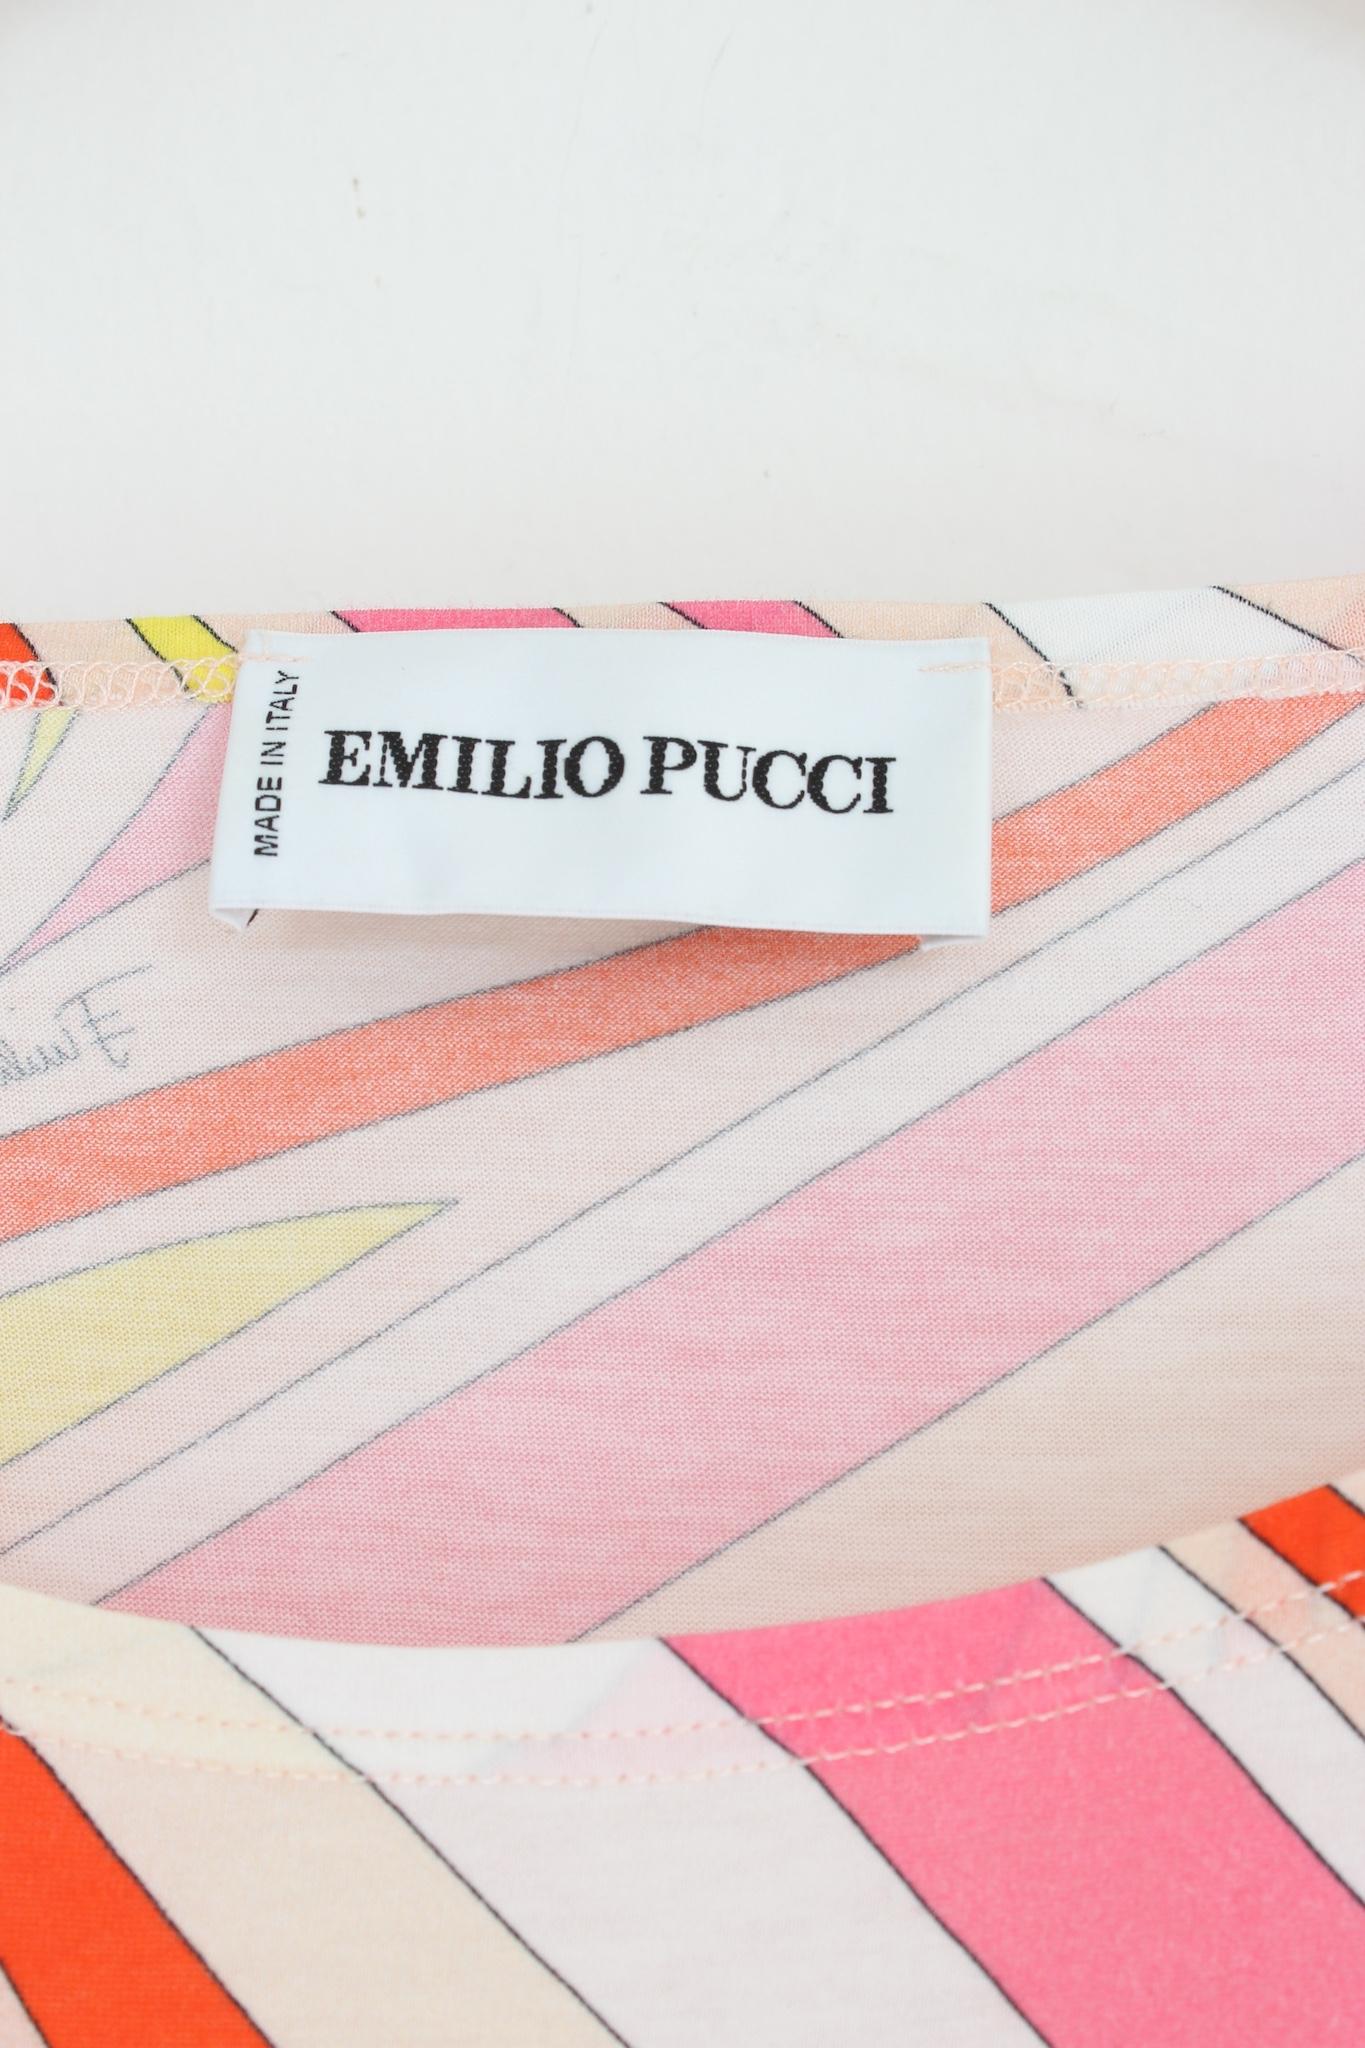 Emilio Pucci White Orange Cotton Long Casual T Shirt 1990s 3